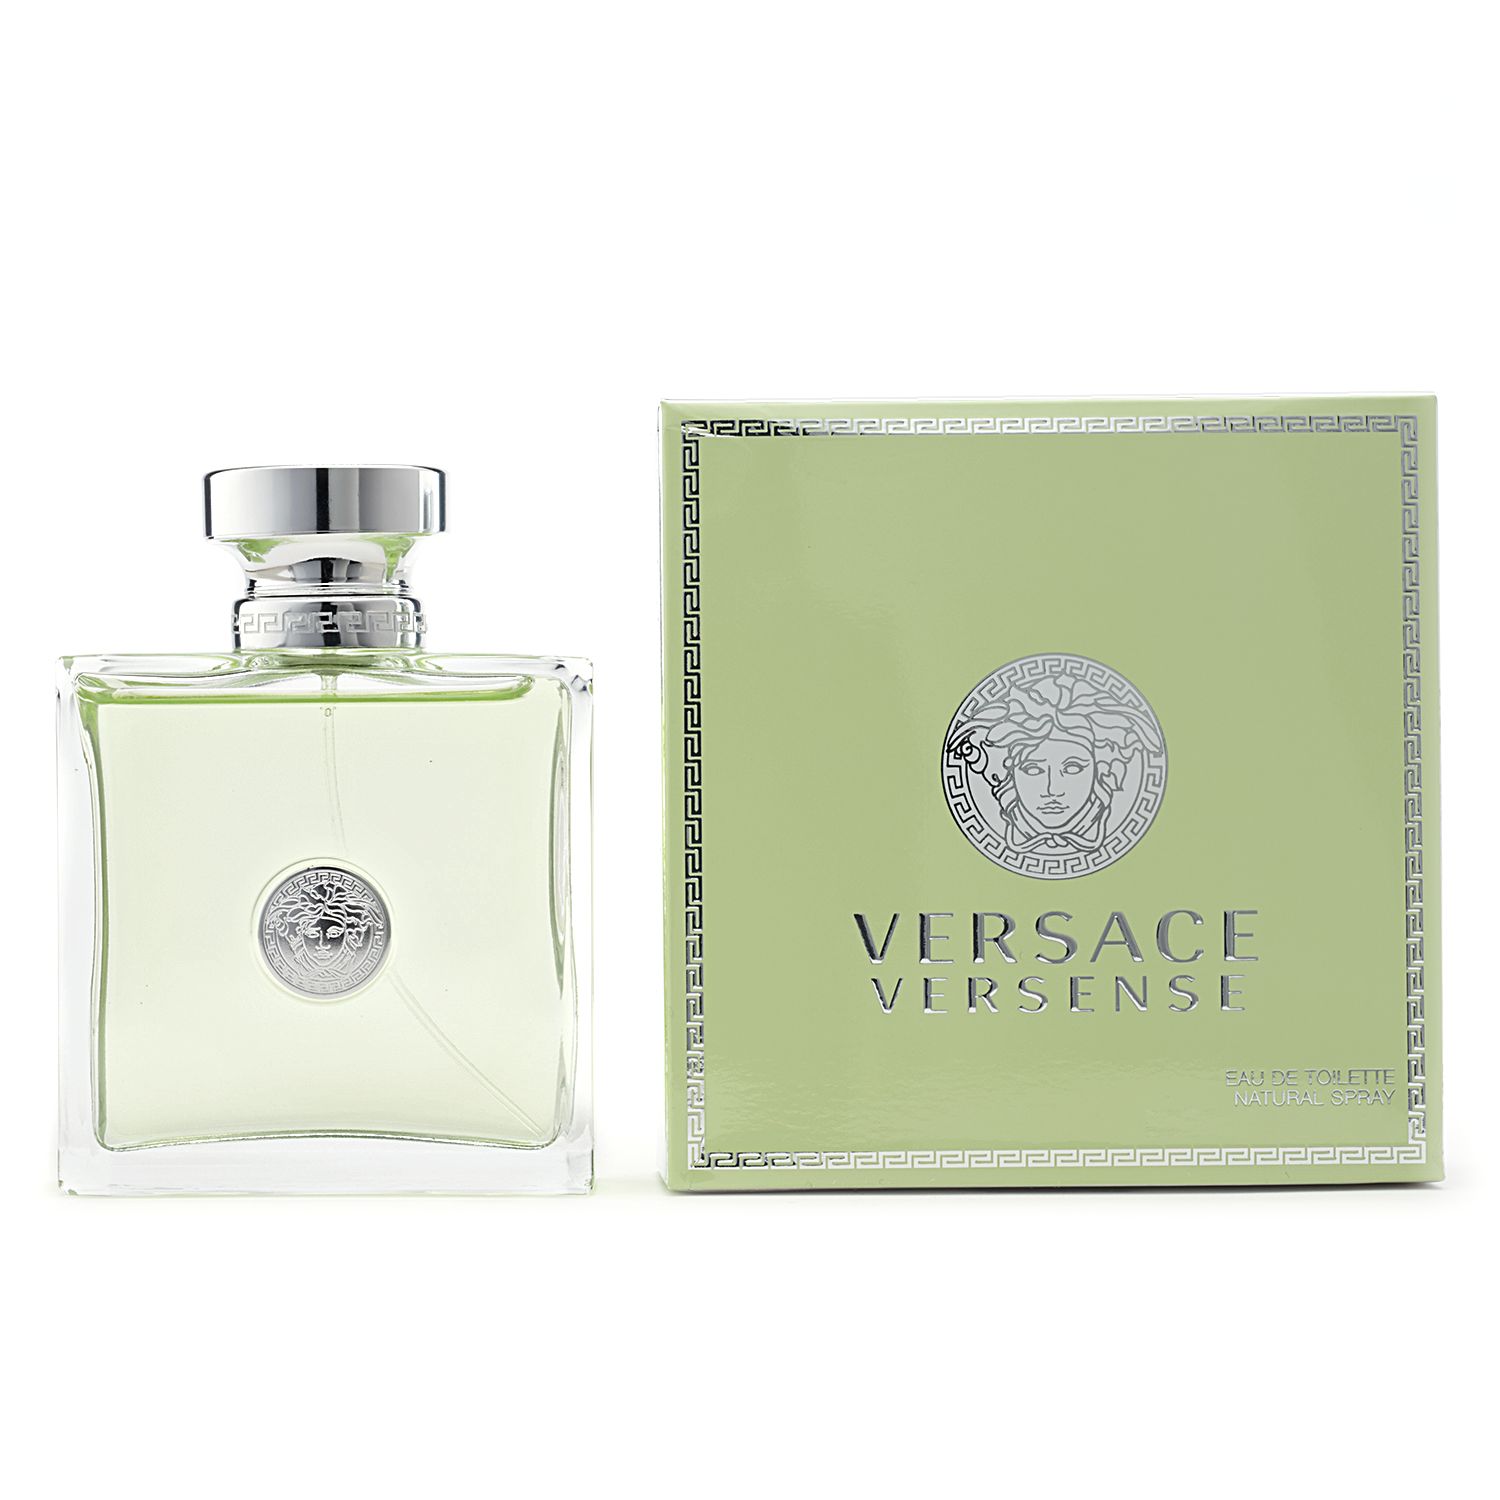 Versace Versense Women's Perfume